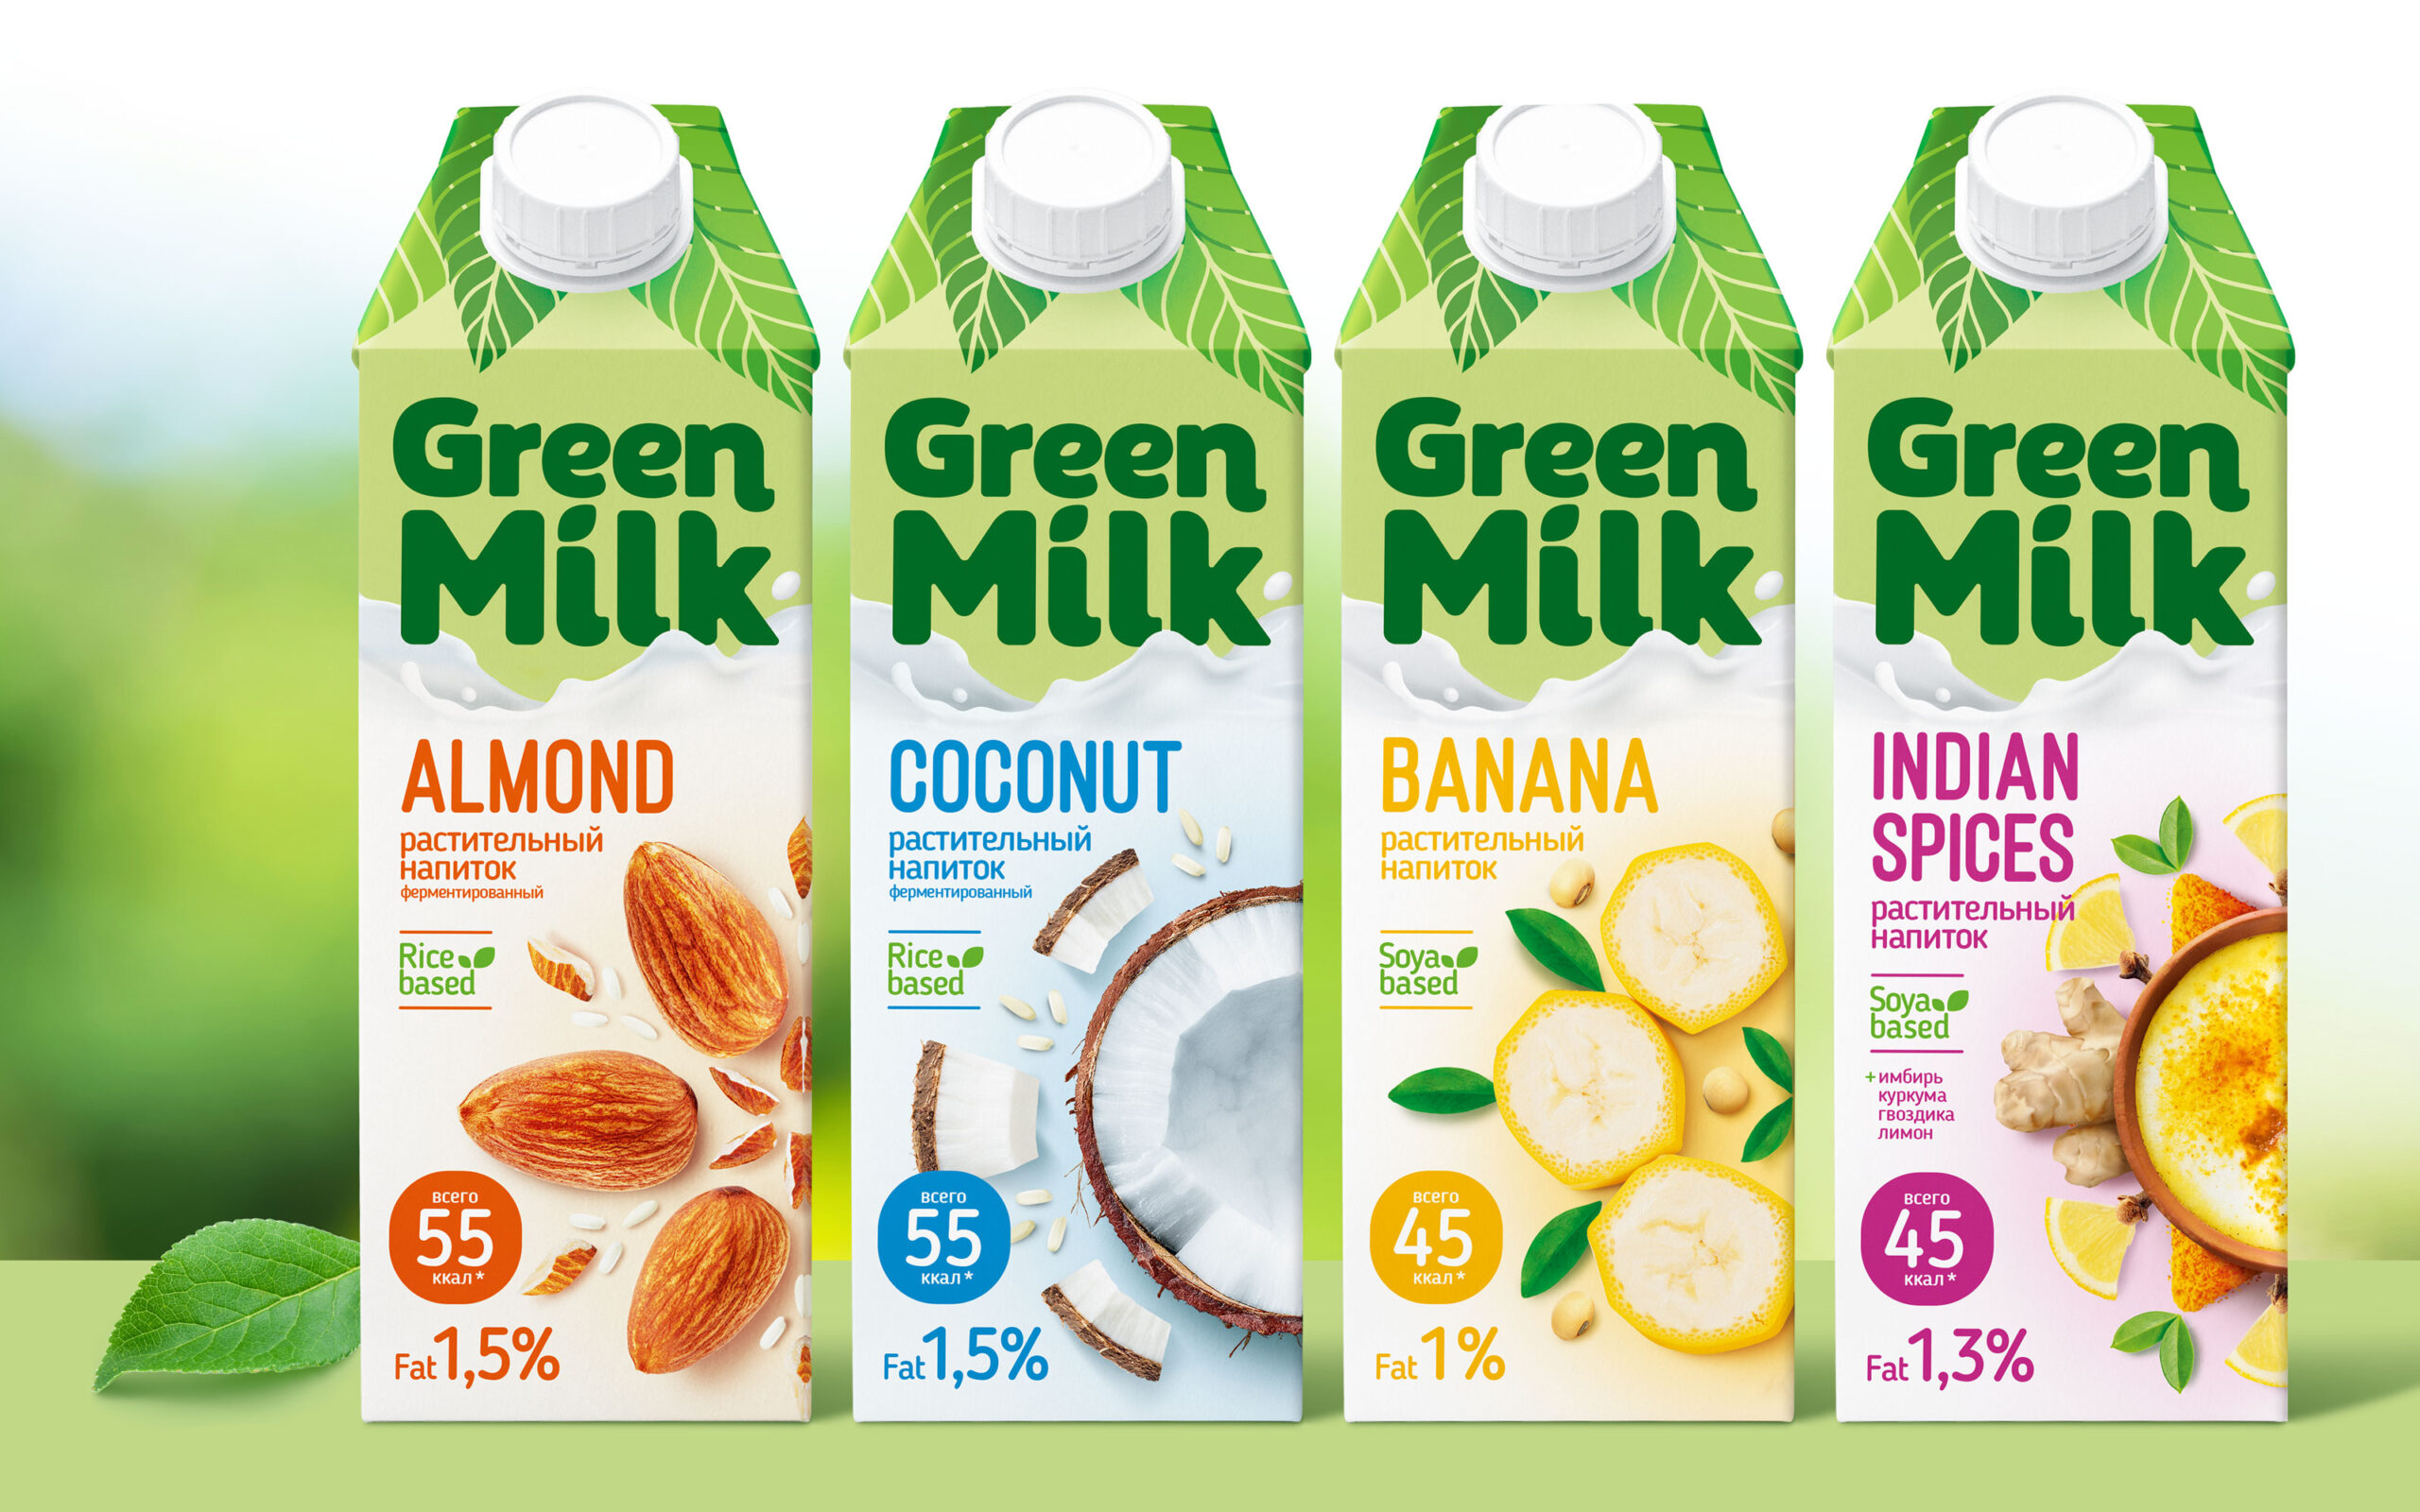 GREEN MILK 绿色牛奶包装设计，绿色叶子二分版式提高品牌认知